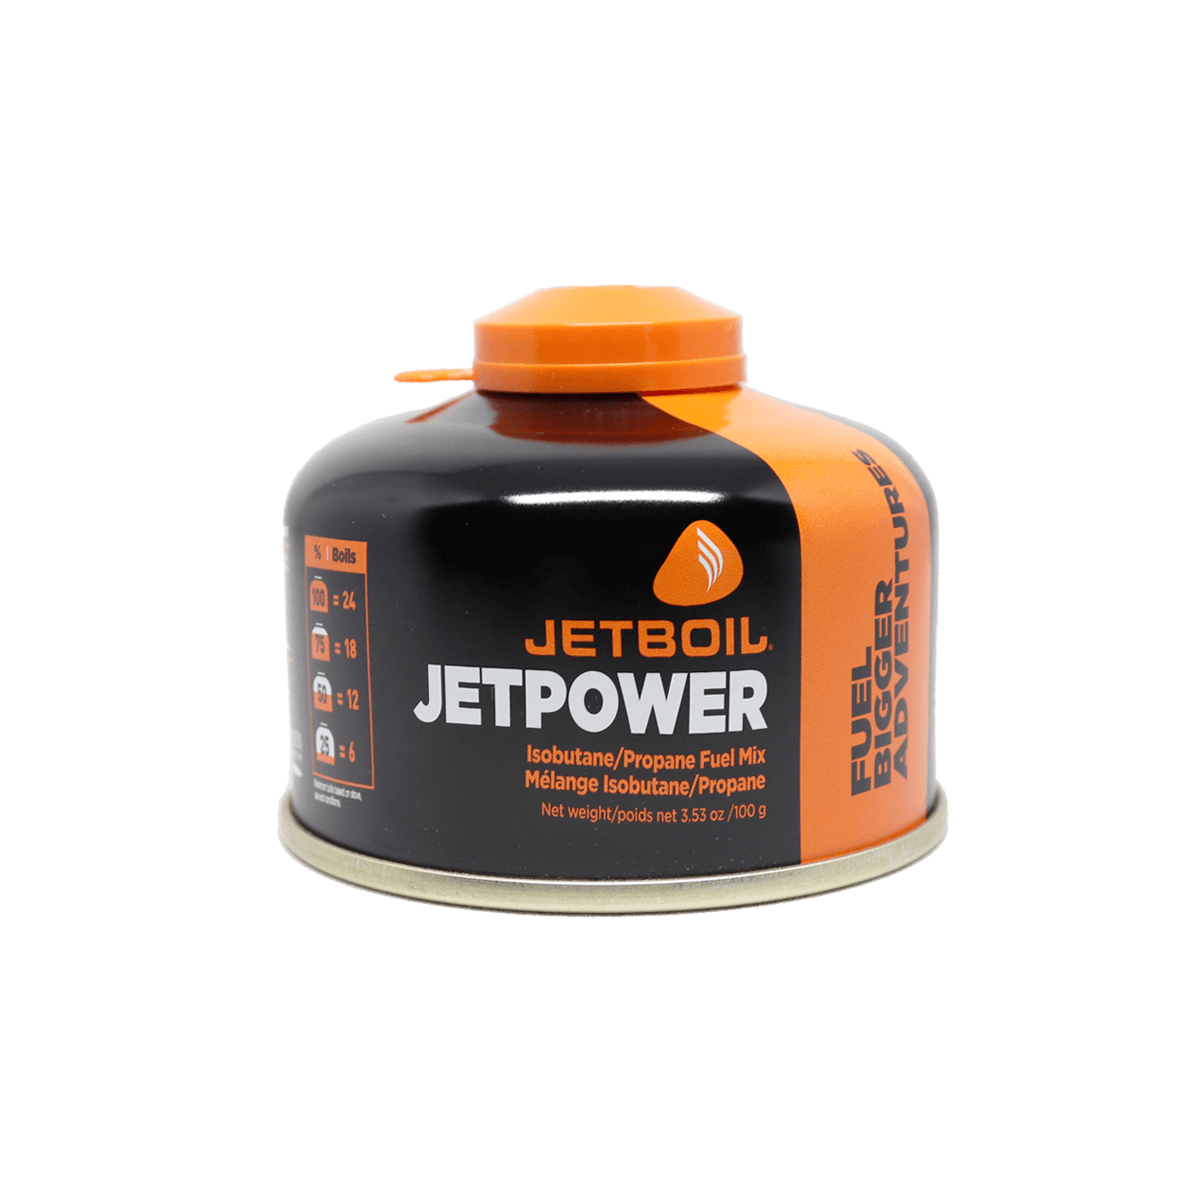 Jetboil - Jetpower Fuel